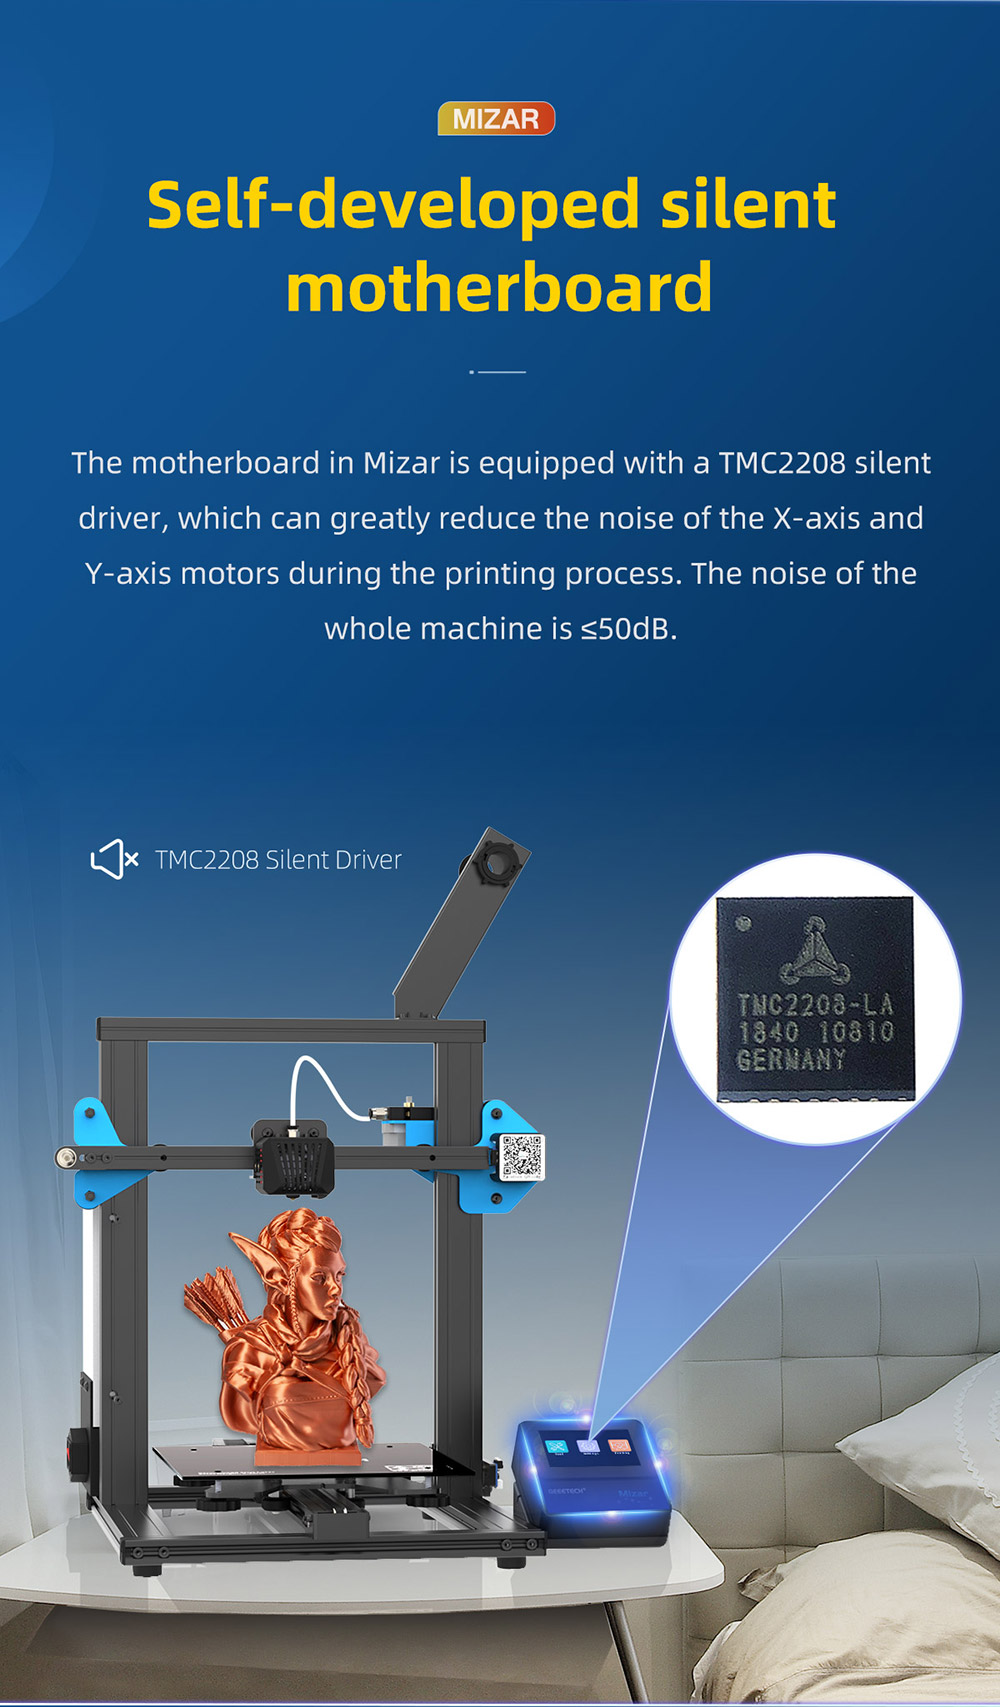 Mizar self-developed silent motherboard